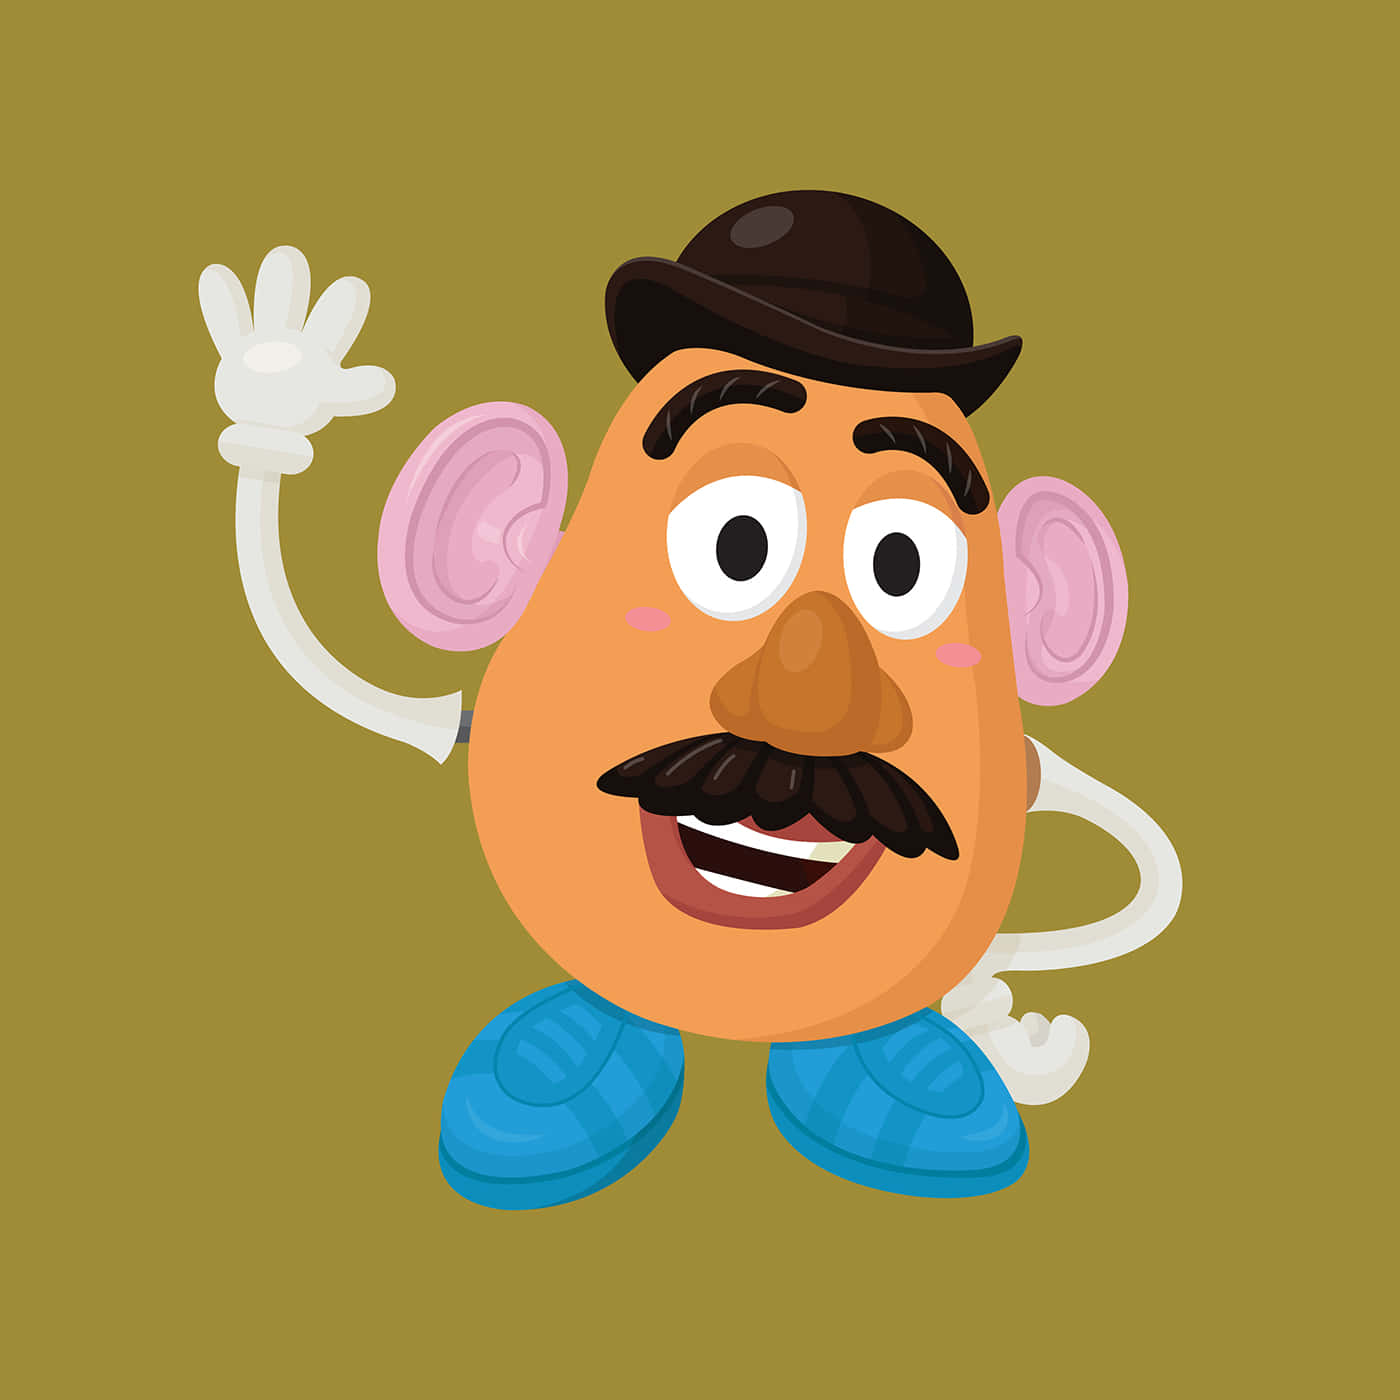 Cartoonbild Von Mr. Potato Head